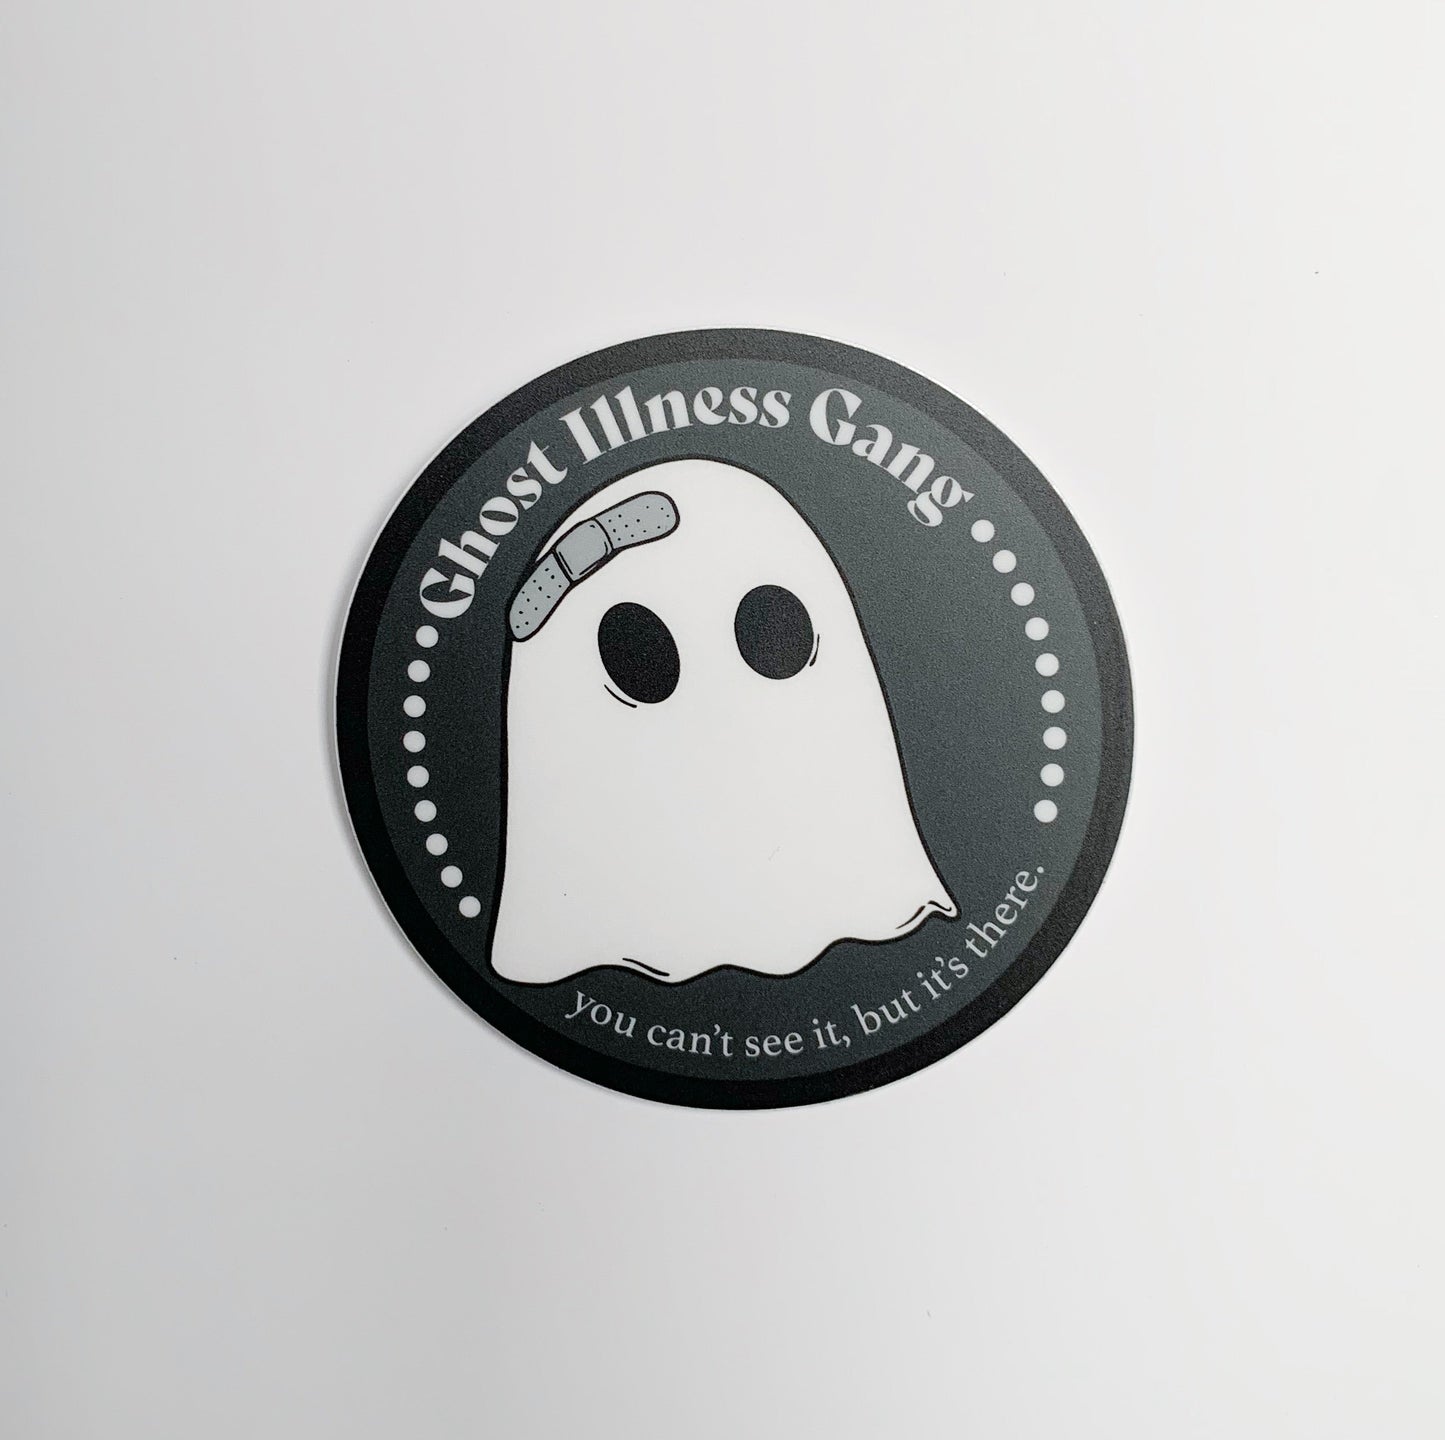 Ghost Illness Gang Sticker